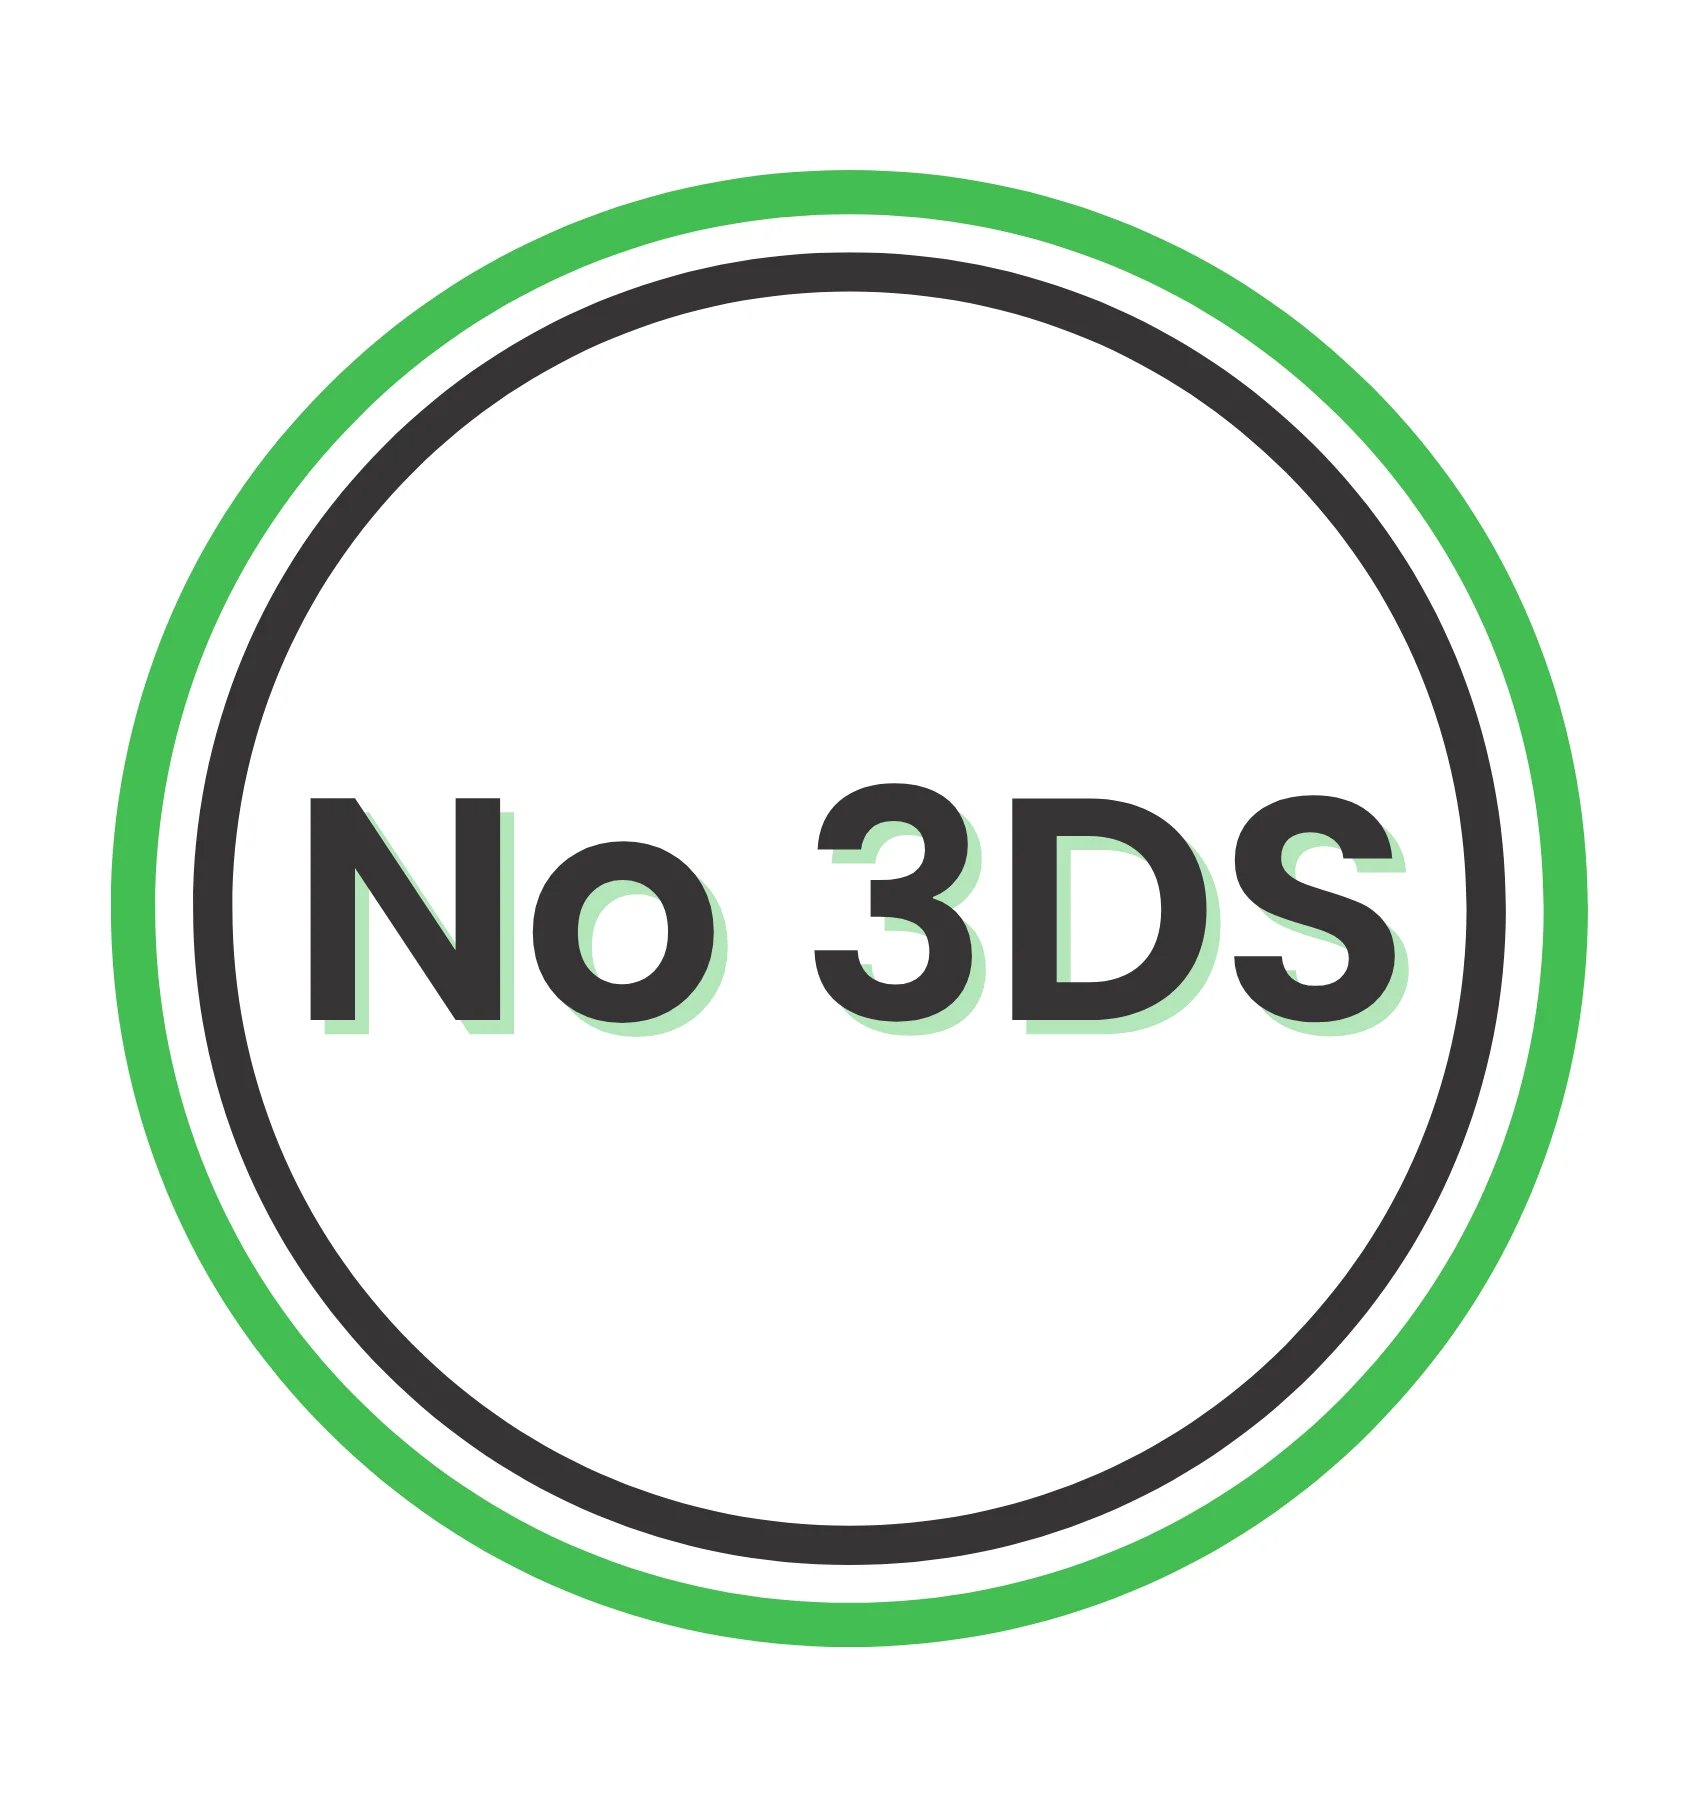 No 3ds